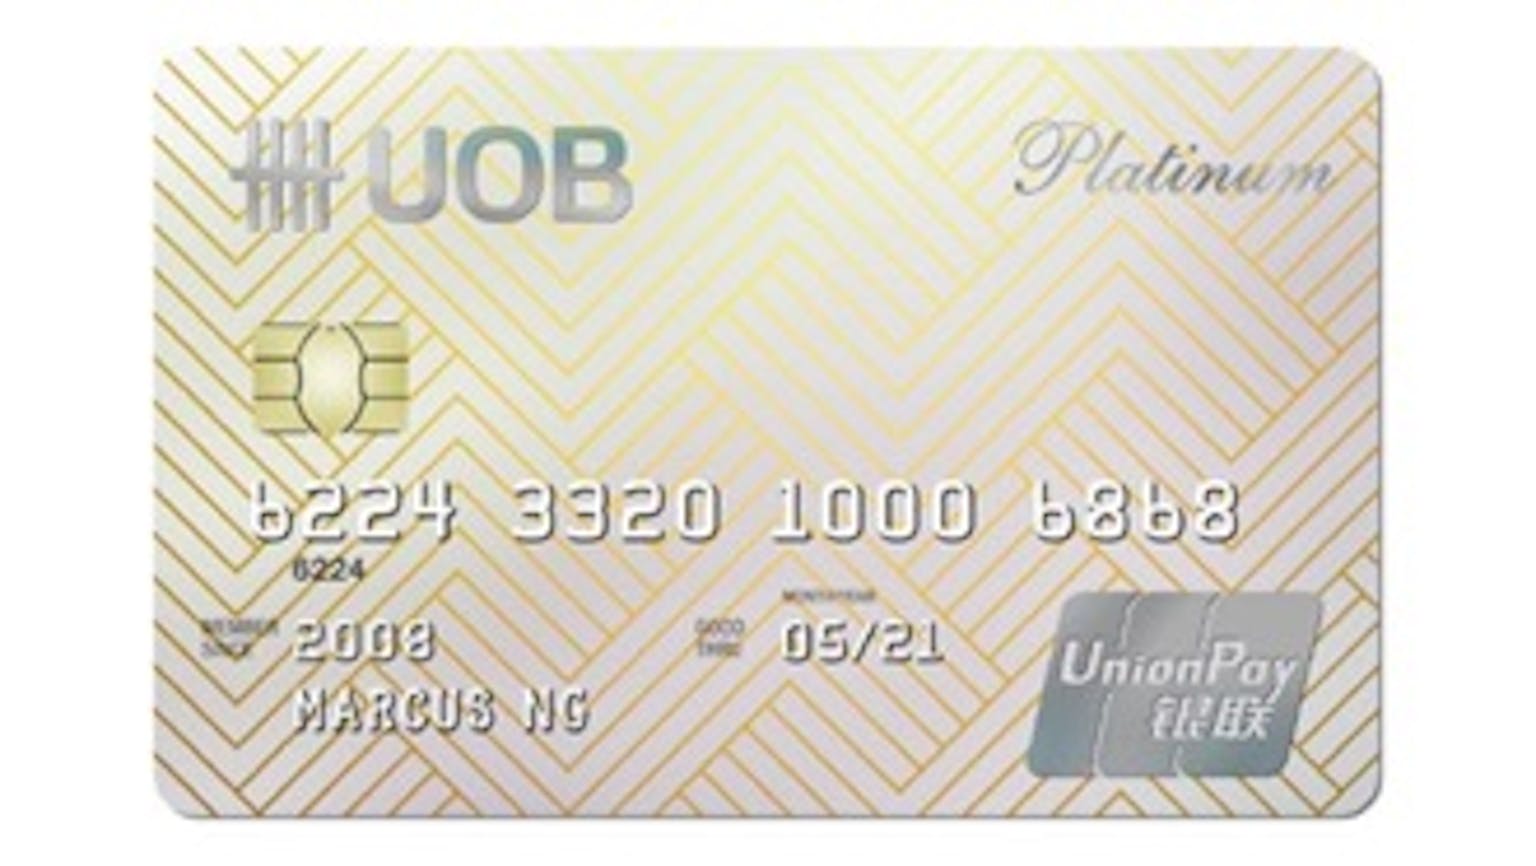 UOB UnionPay Card